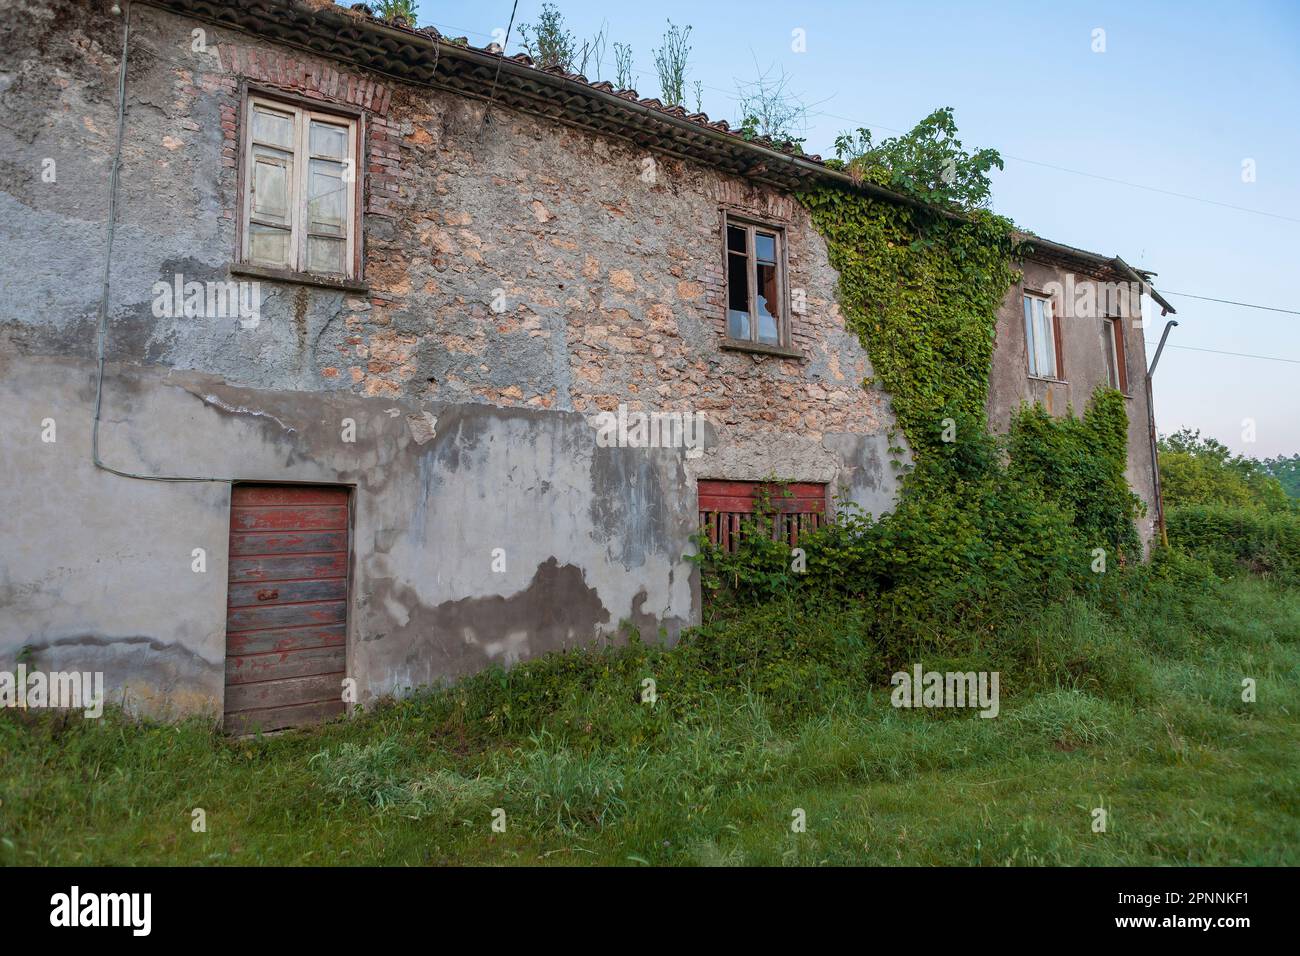 Abandoned and derelict farmhouse near the village of Tofe, Province of Frosinone, Lazio, Italy Stock Photo